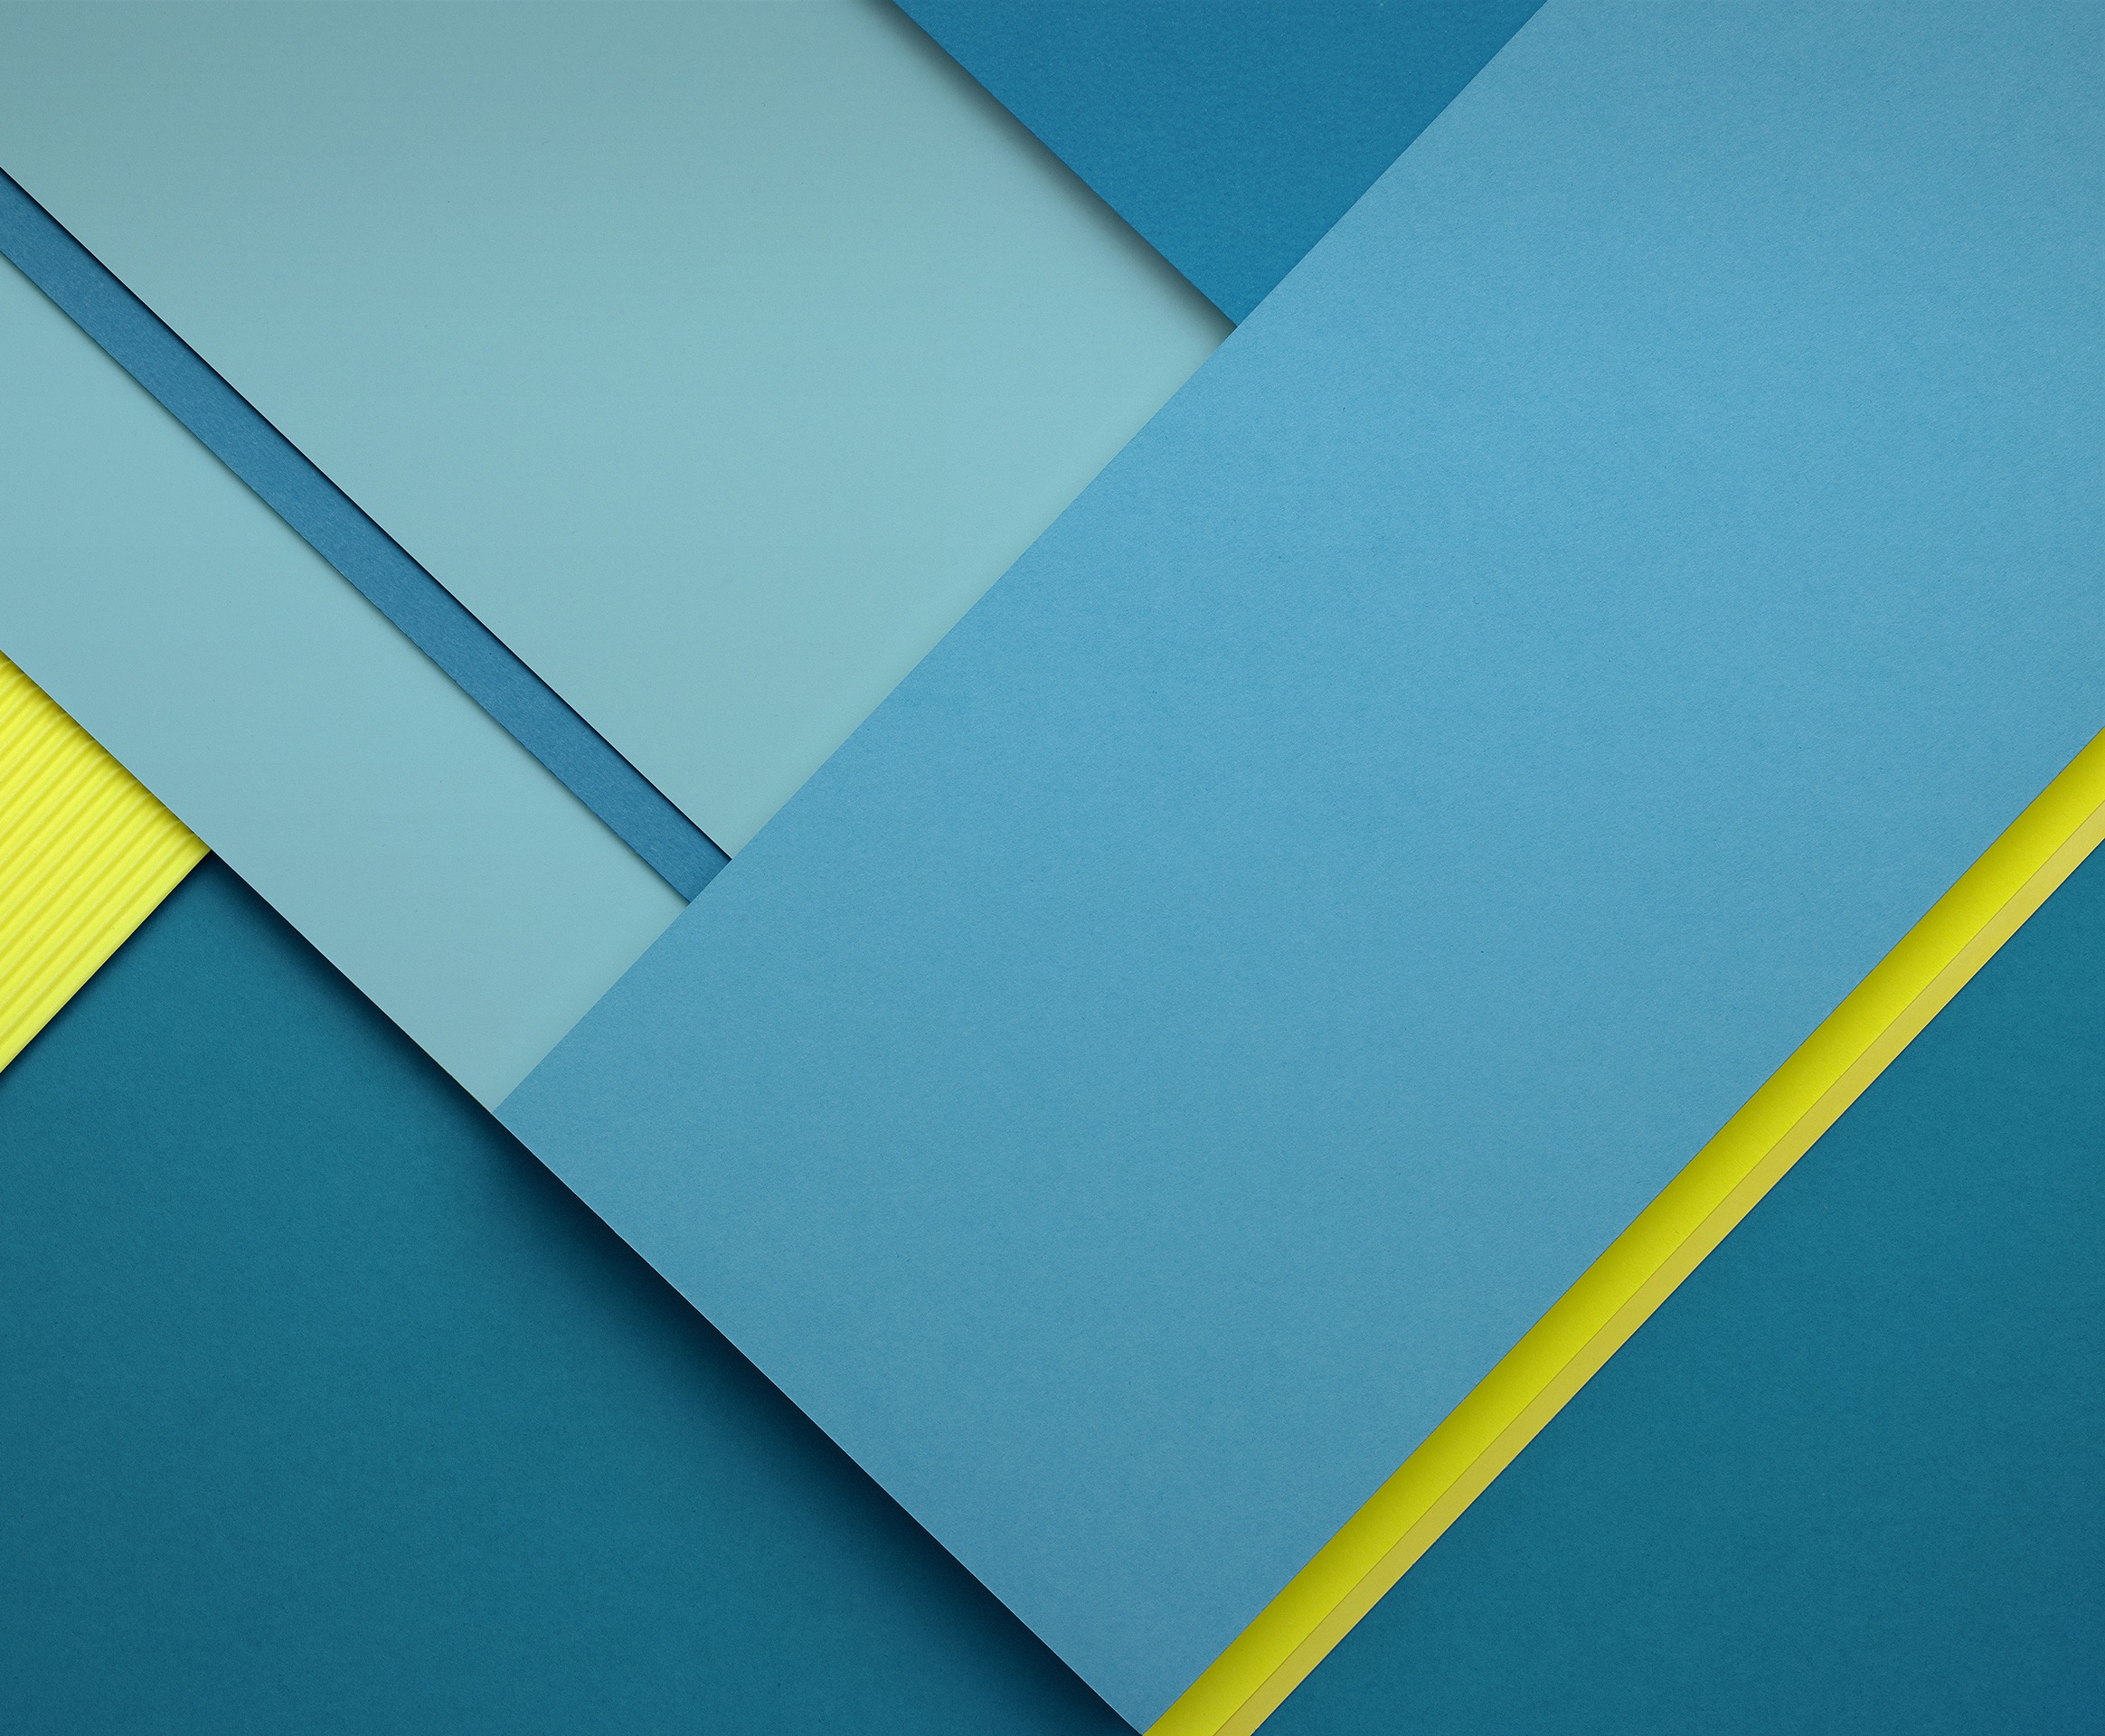 47 Wallpaper For Nexus 7 On Wallpapersafari